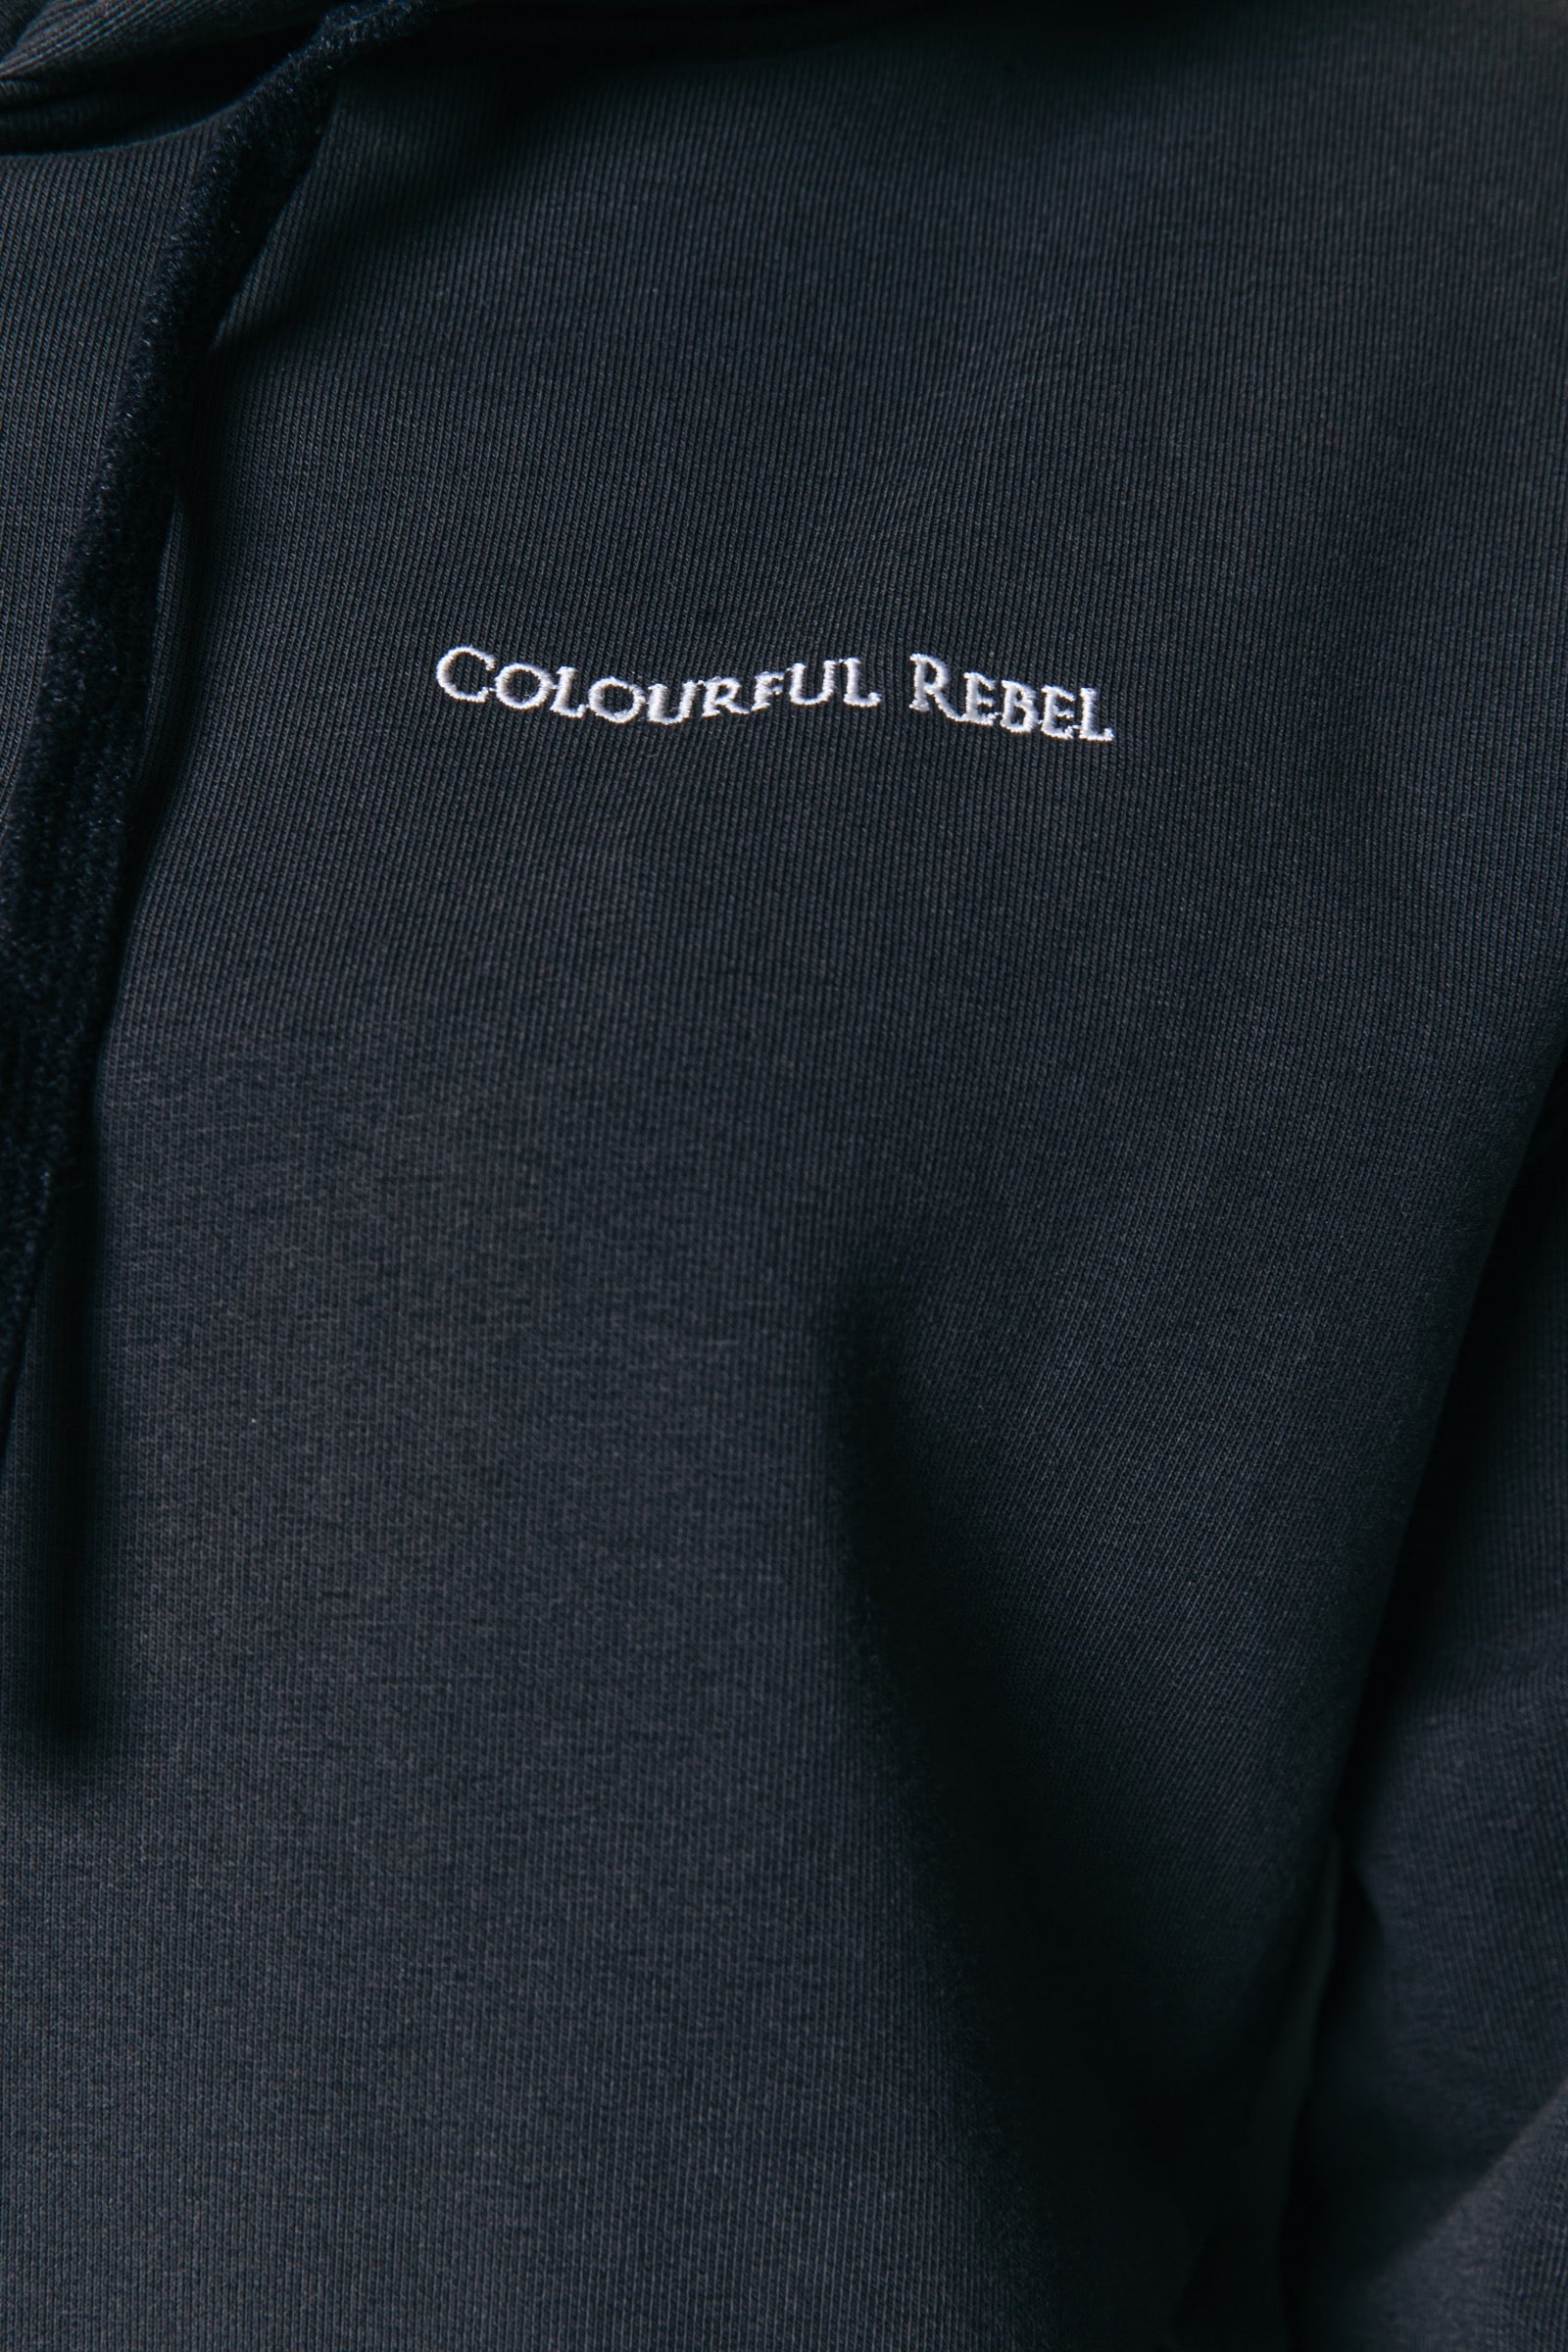 CR Rebelation hoodie - pirate black